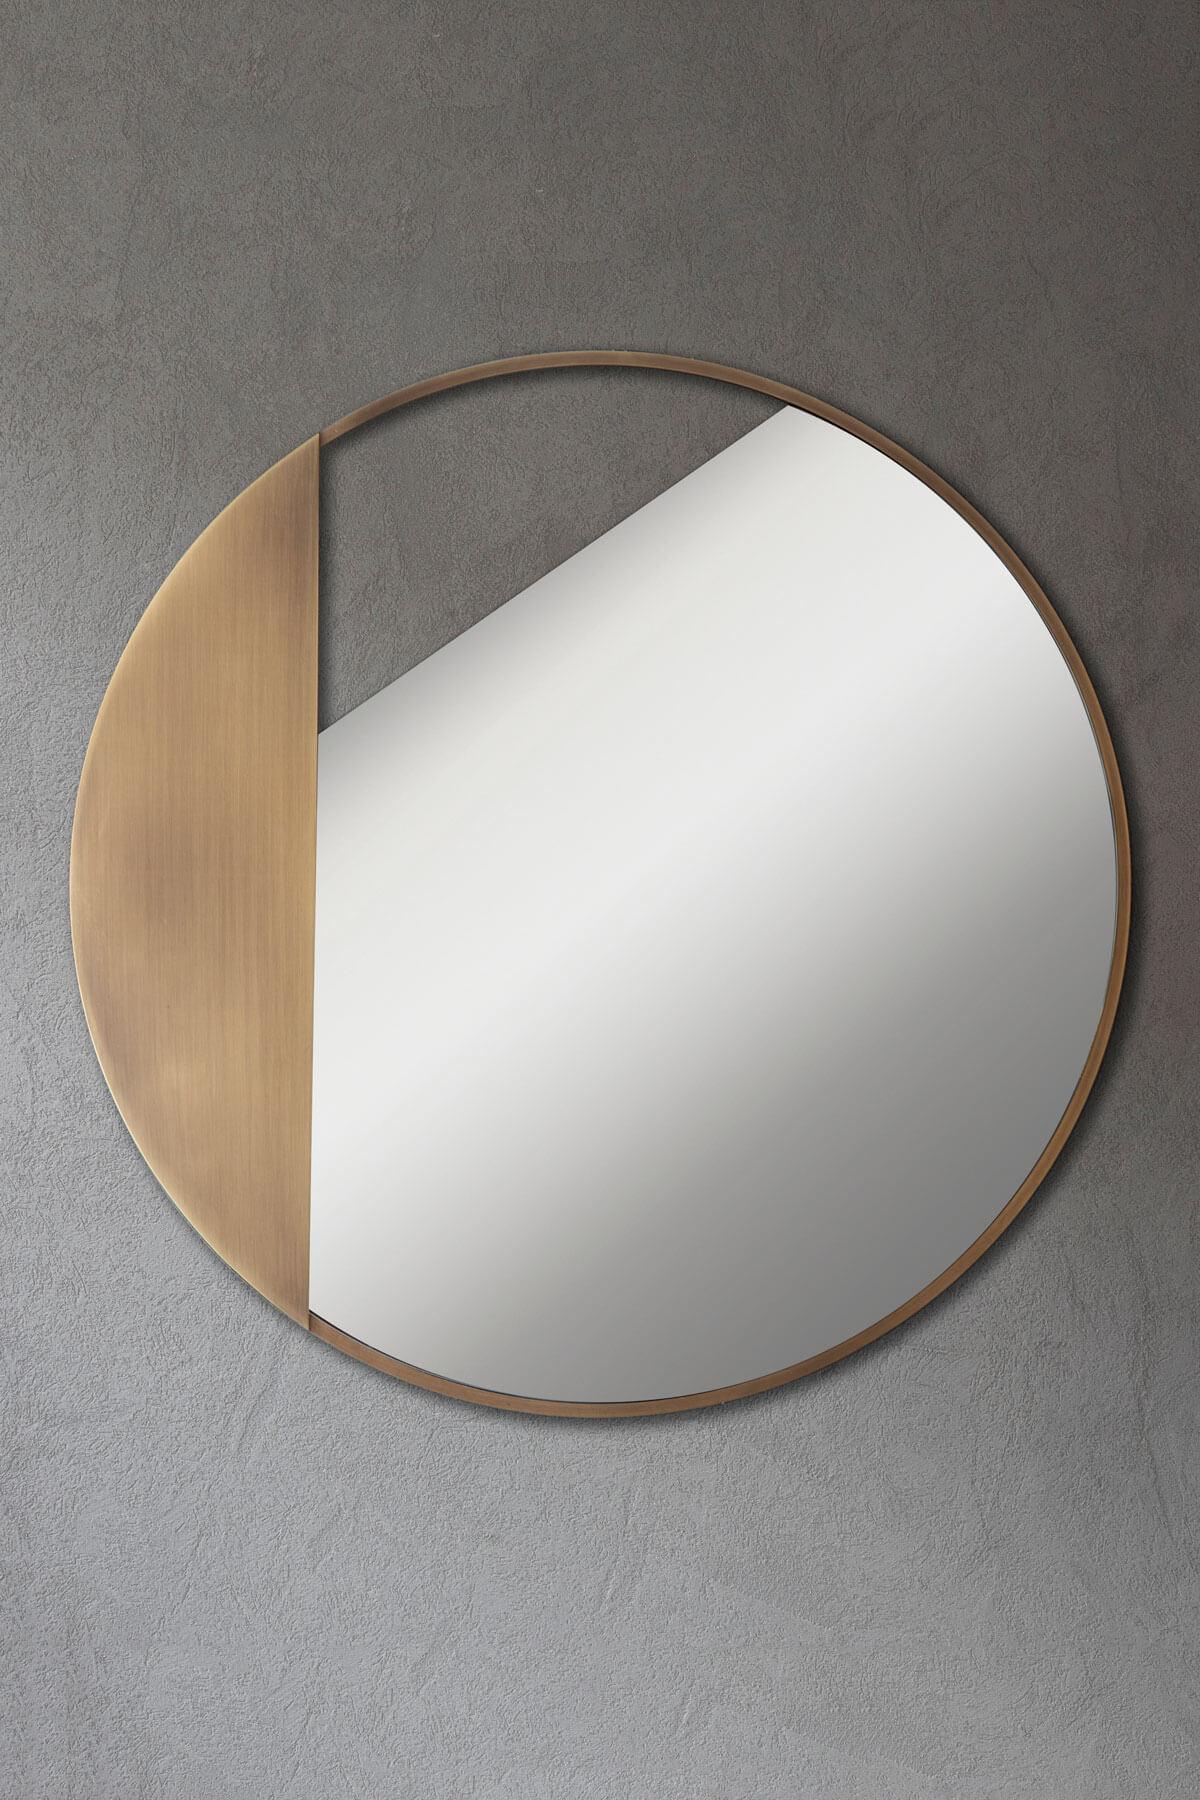 Metalwork Solida Brass Circular Mirror For Sale